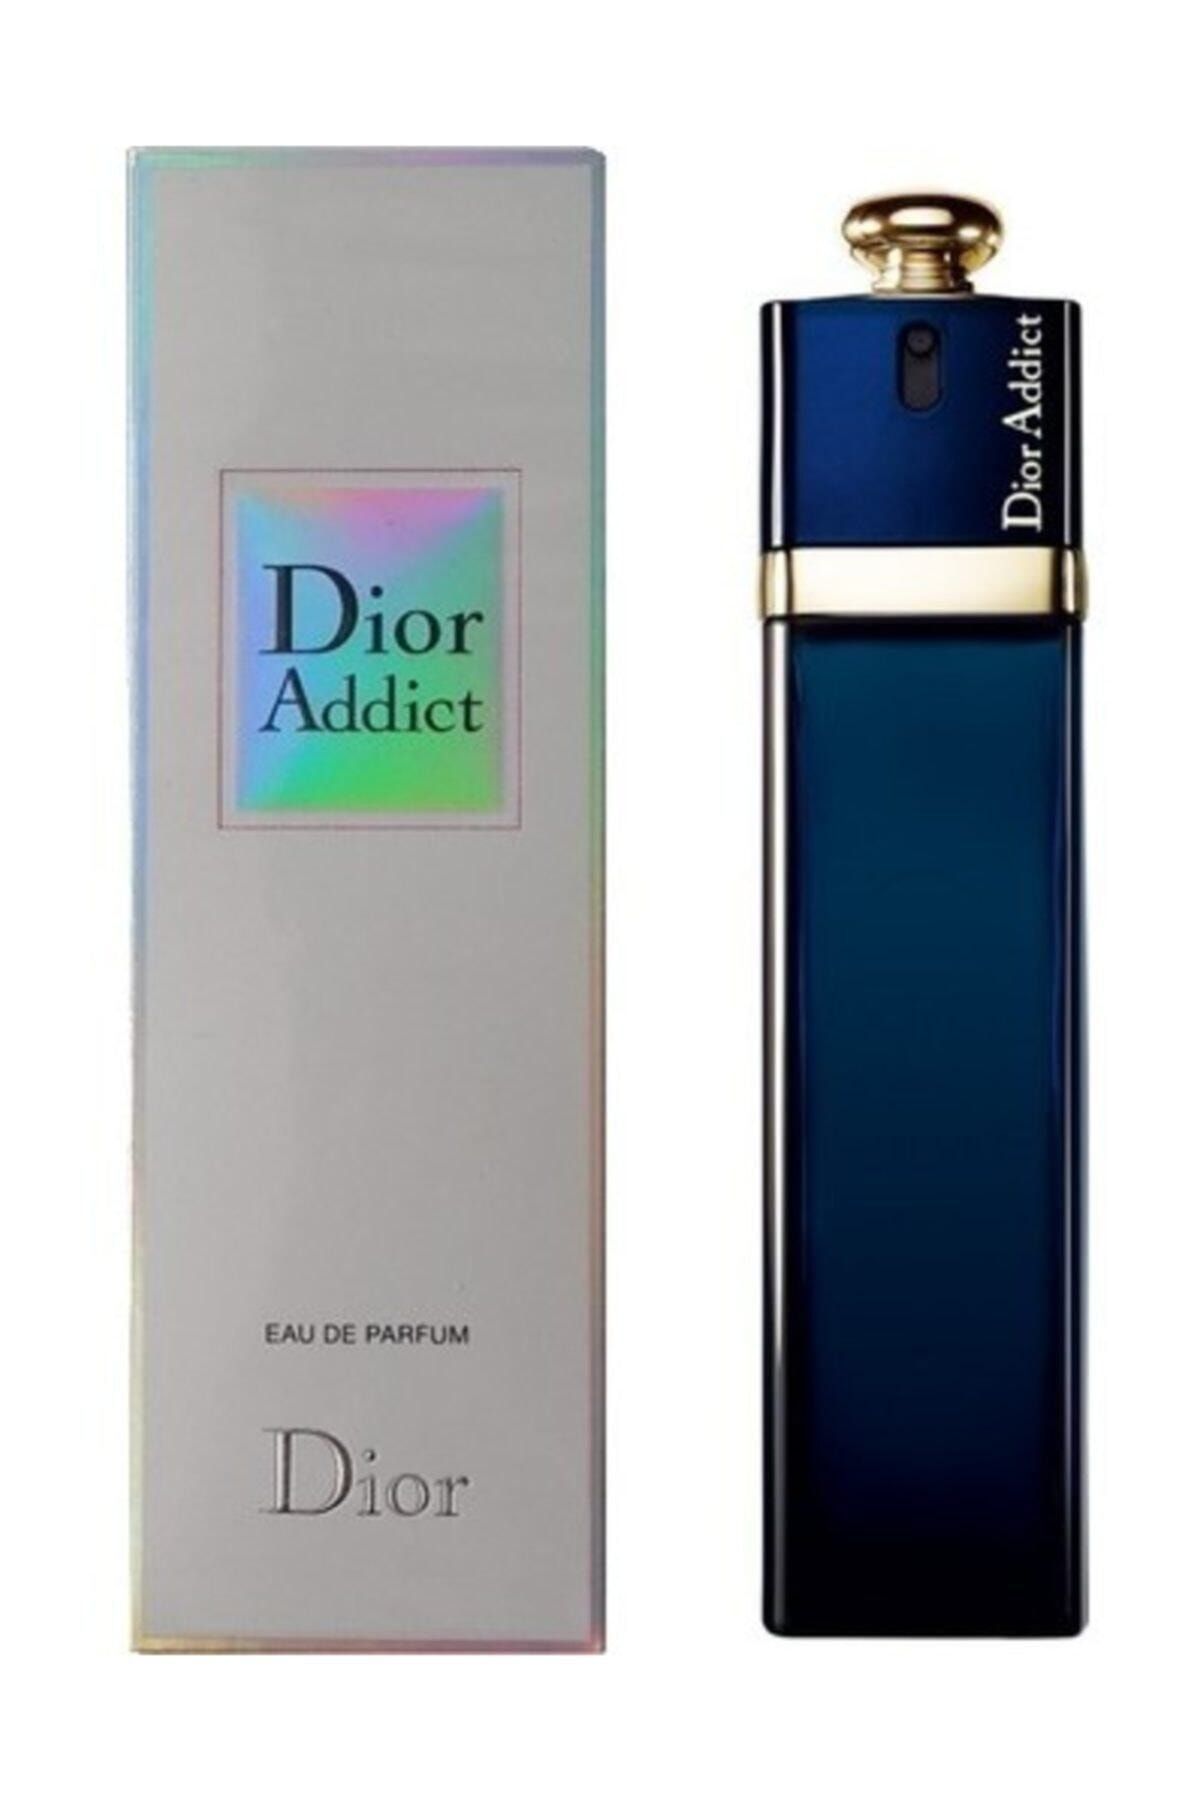 Туалетная вода addict. Christian Dior Addict Eau de Parfum. Christian Dior Addict Eau de Parfum 100ml. Dior Addict 50ml EDP. Christian Dior "Dior Addict" 100 ml.